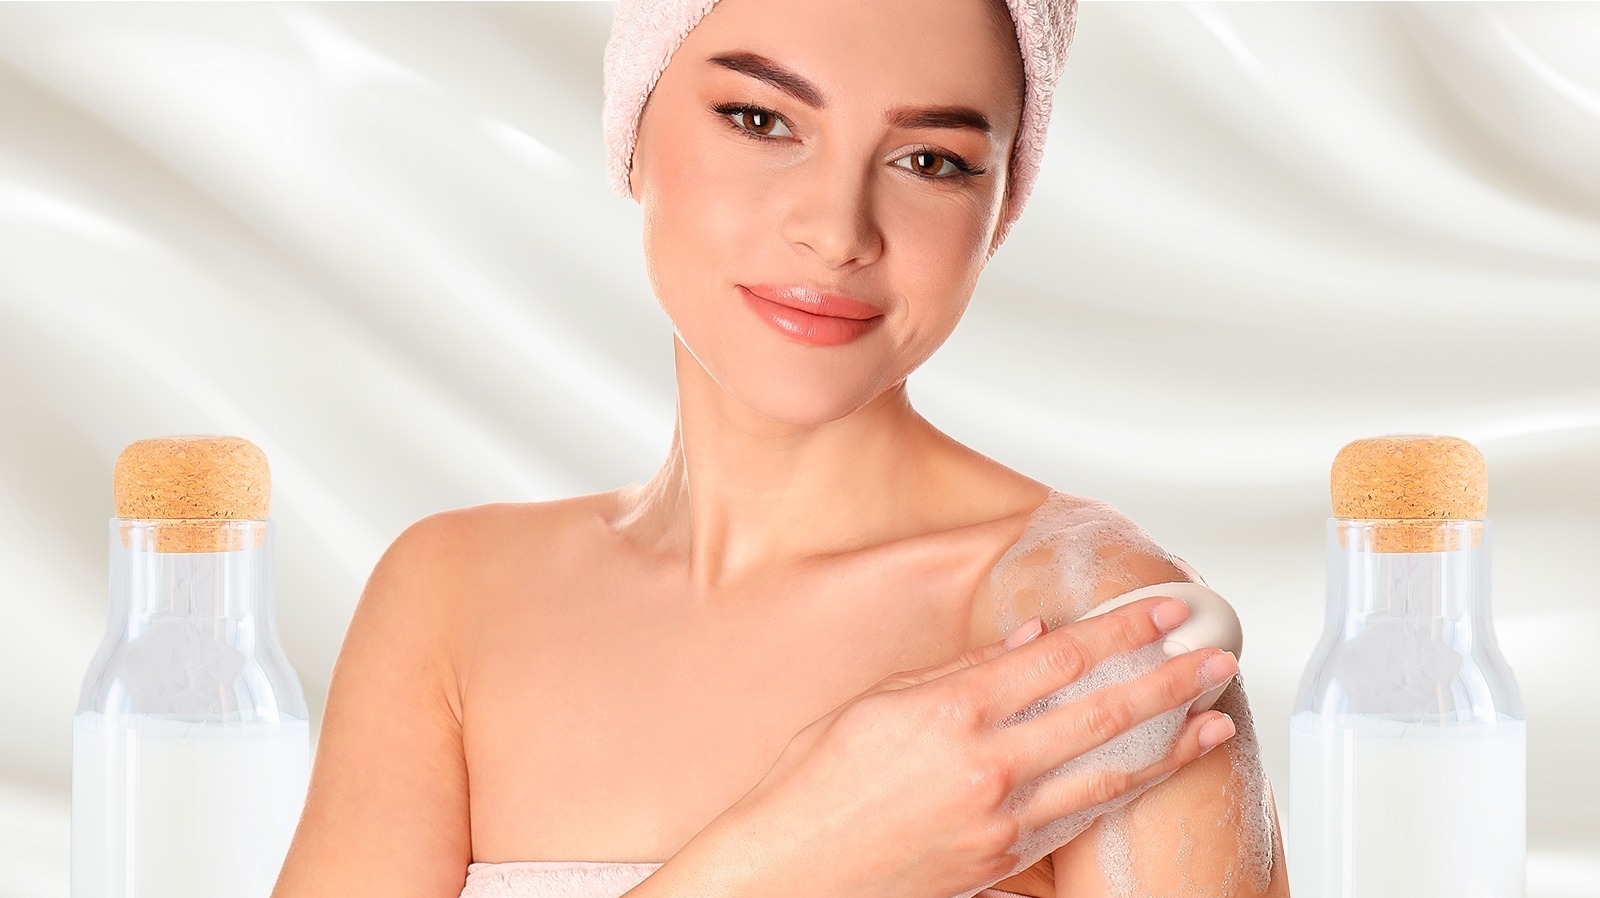 Top 5 Benefits Of Using Goat's Milk Soap - Natural Skin Revival